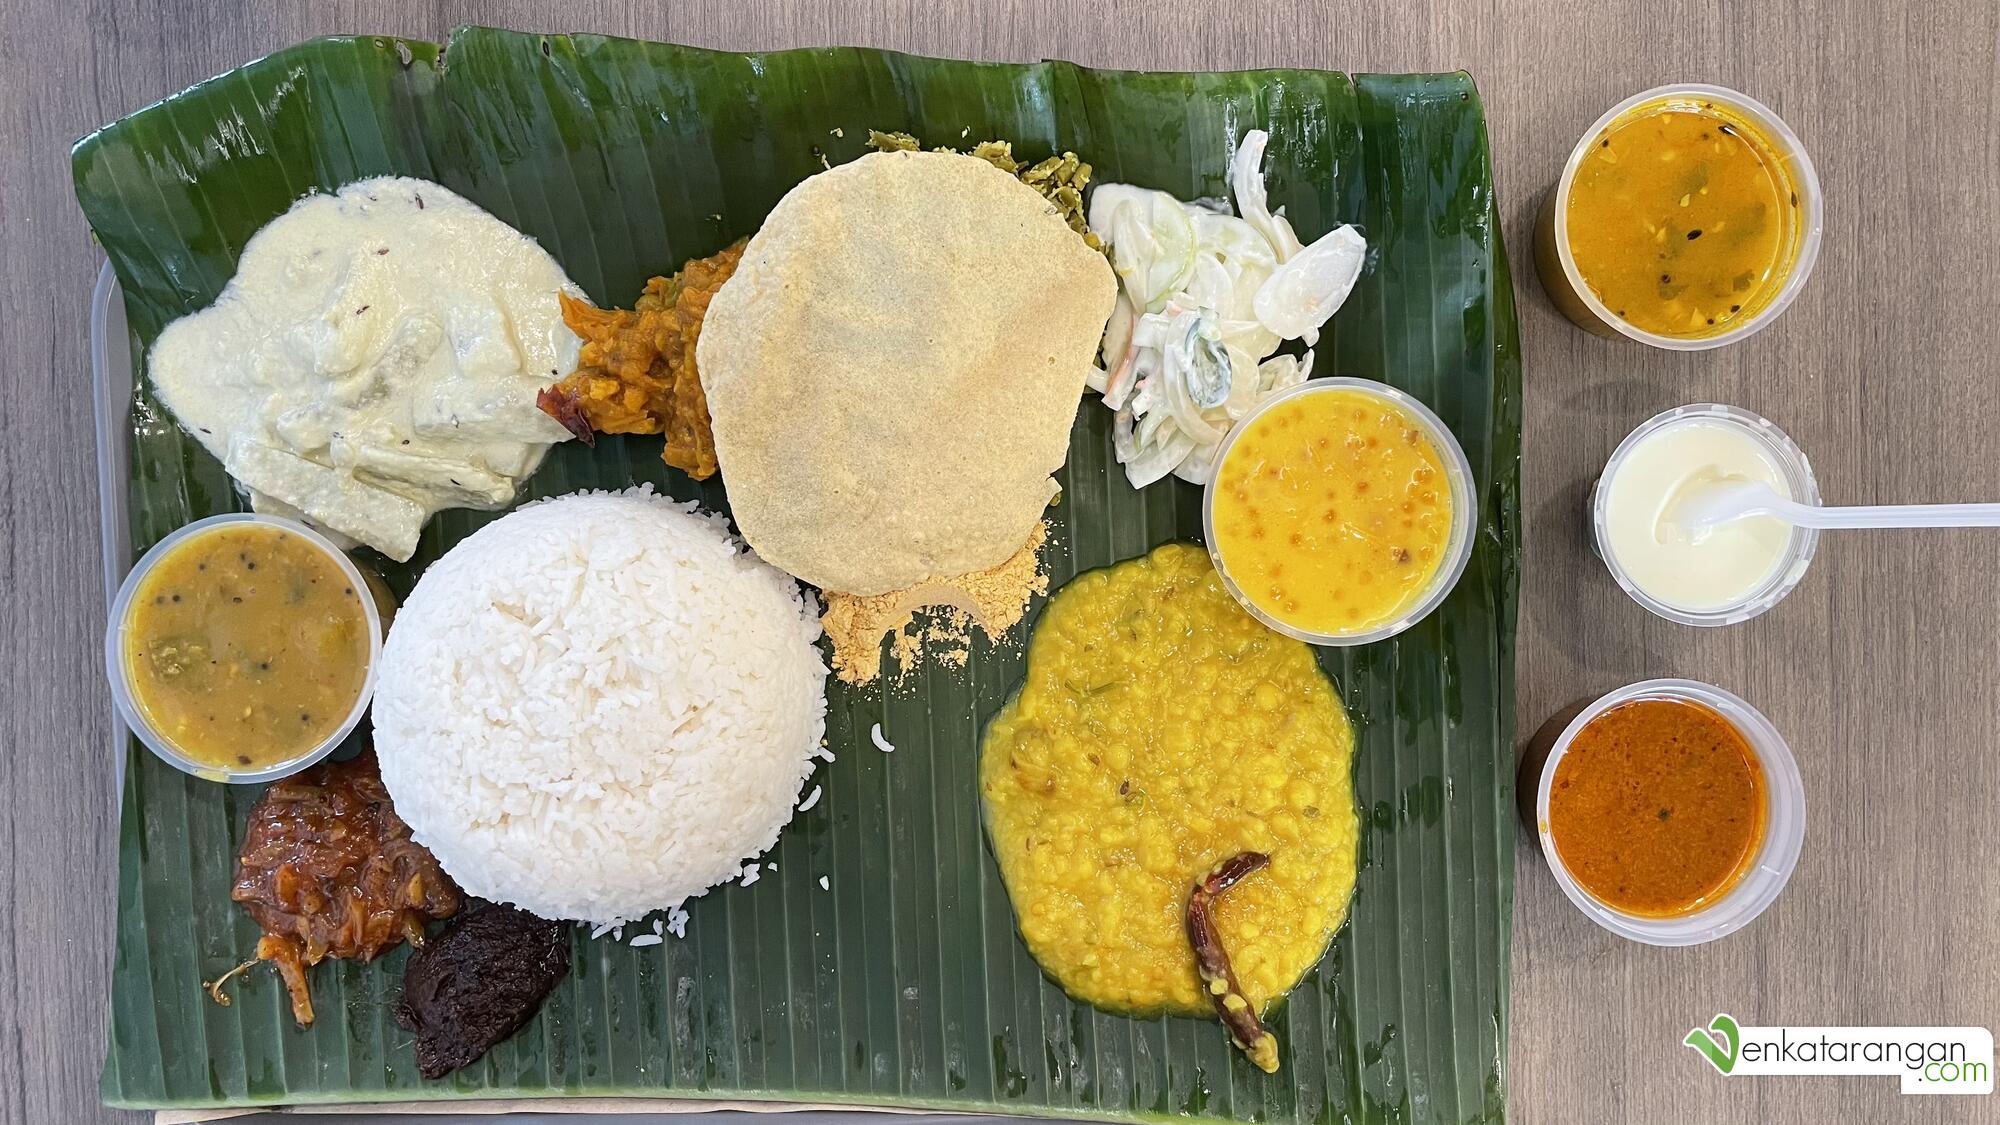 Andhra Meal - Komala Vilas Vegetarian Restaurant, Singapore